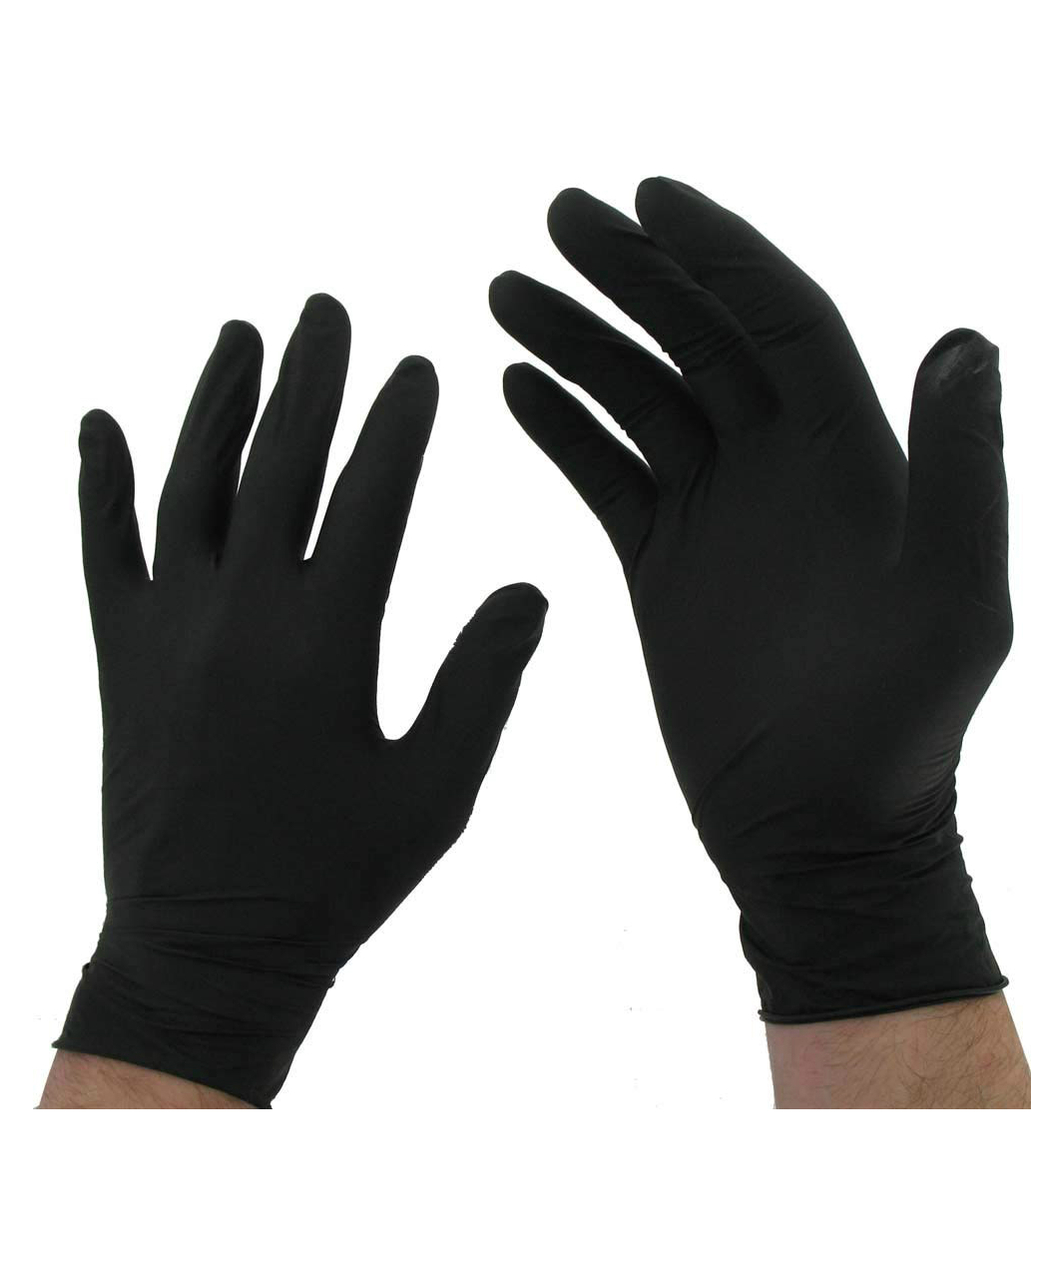 UNIGLOVES Black Disposable Latex Gloves (100 pcs)